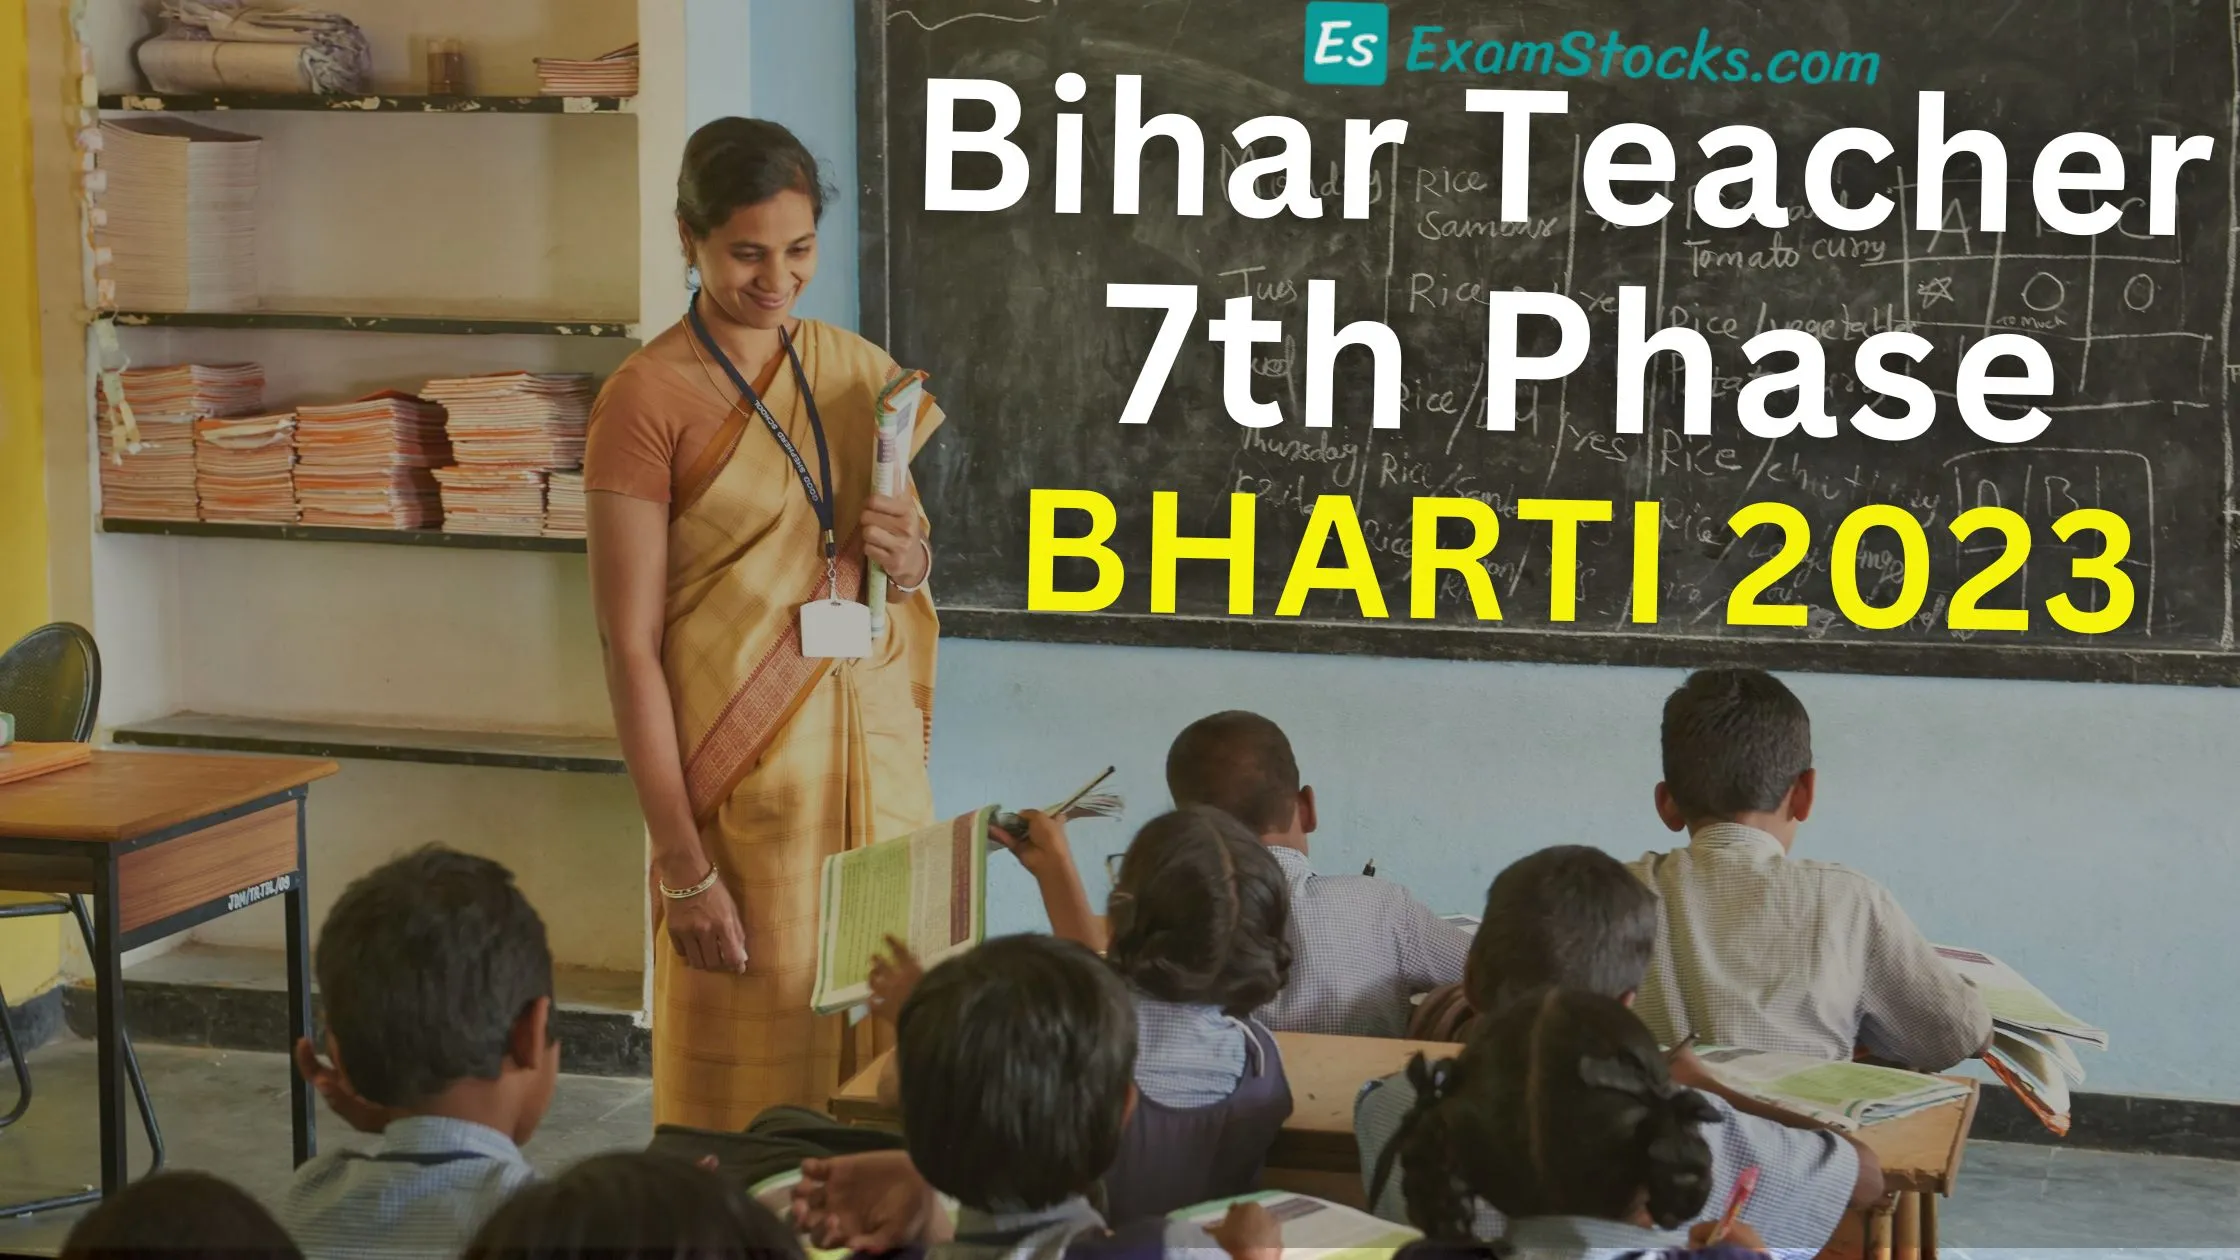 Bihar Teacher 7th Phase Recruitment 2023